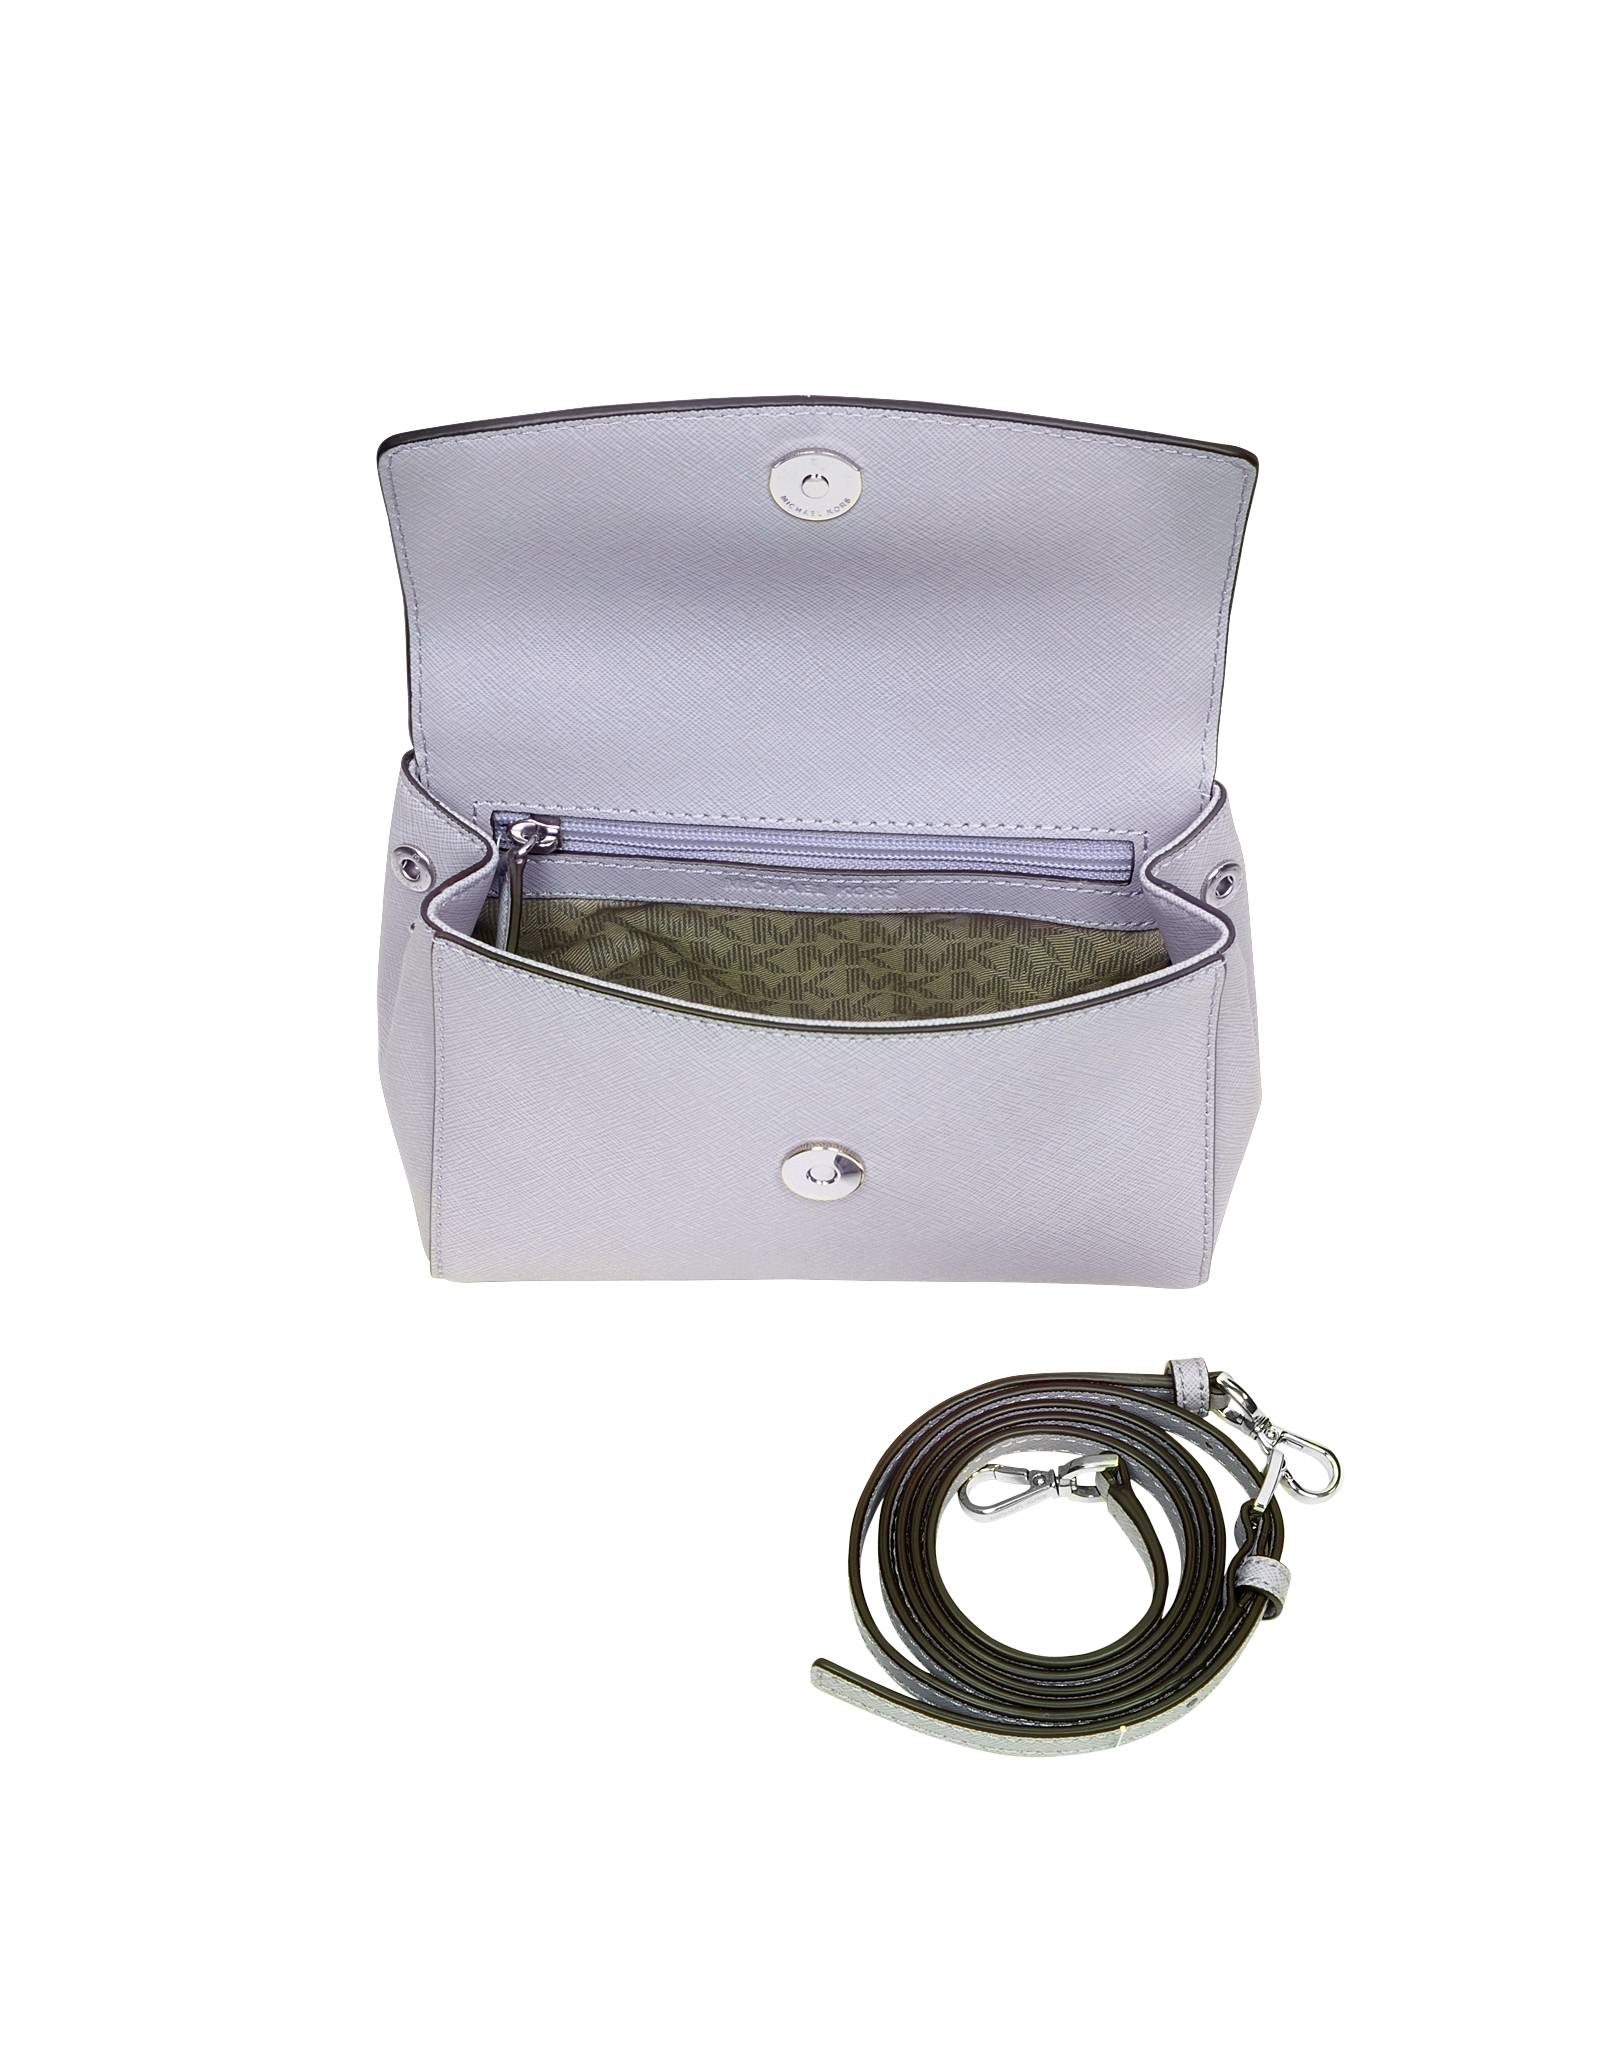 Lyst - Michael Kors Ava Extra Small Saffiano Leather Crossbody Bag in Gray